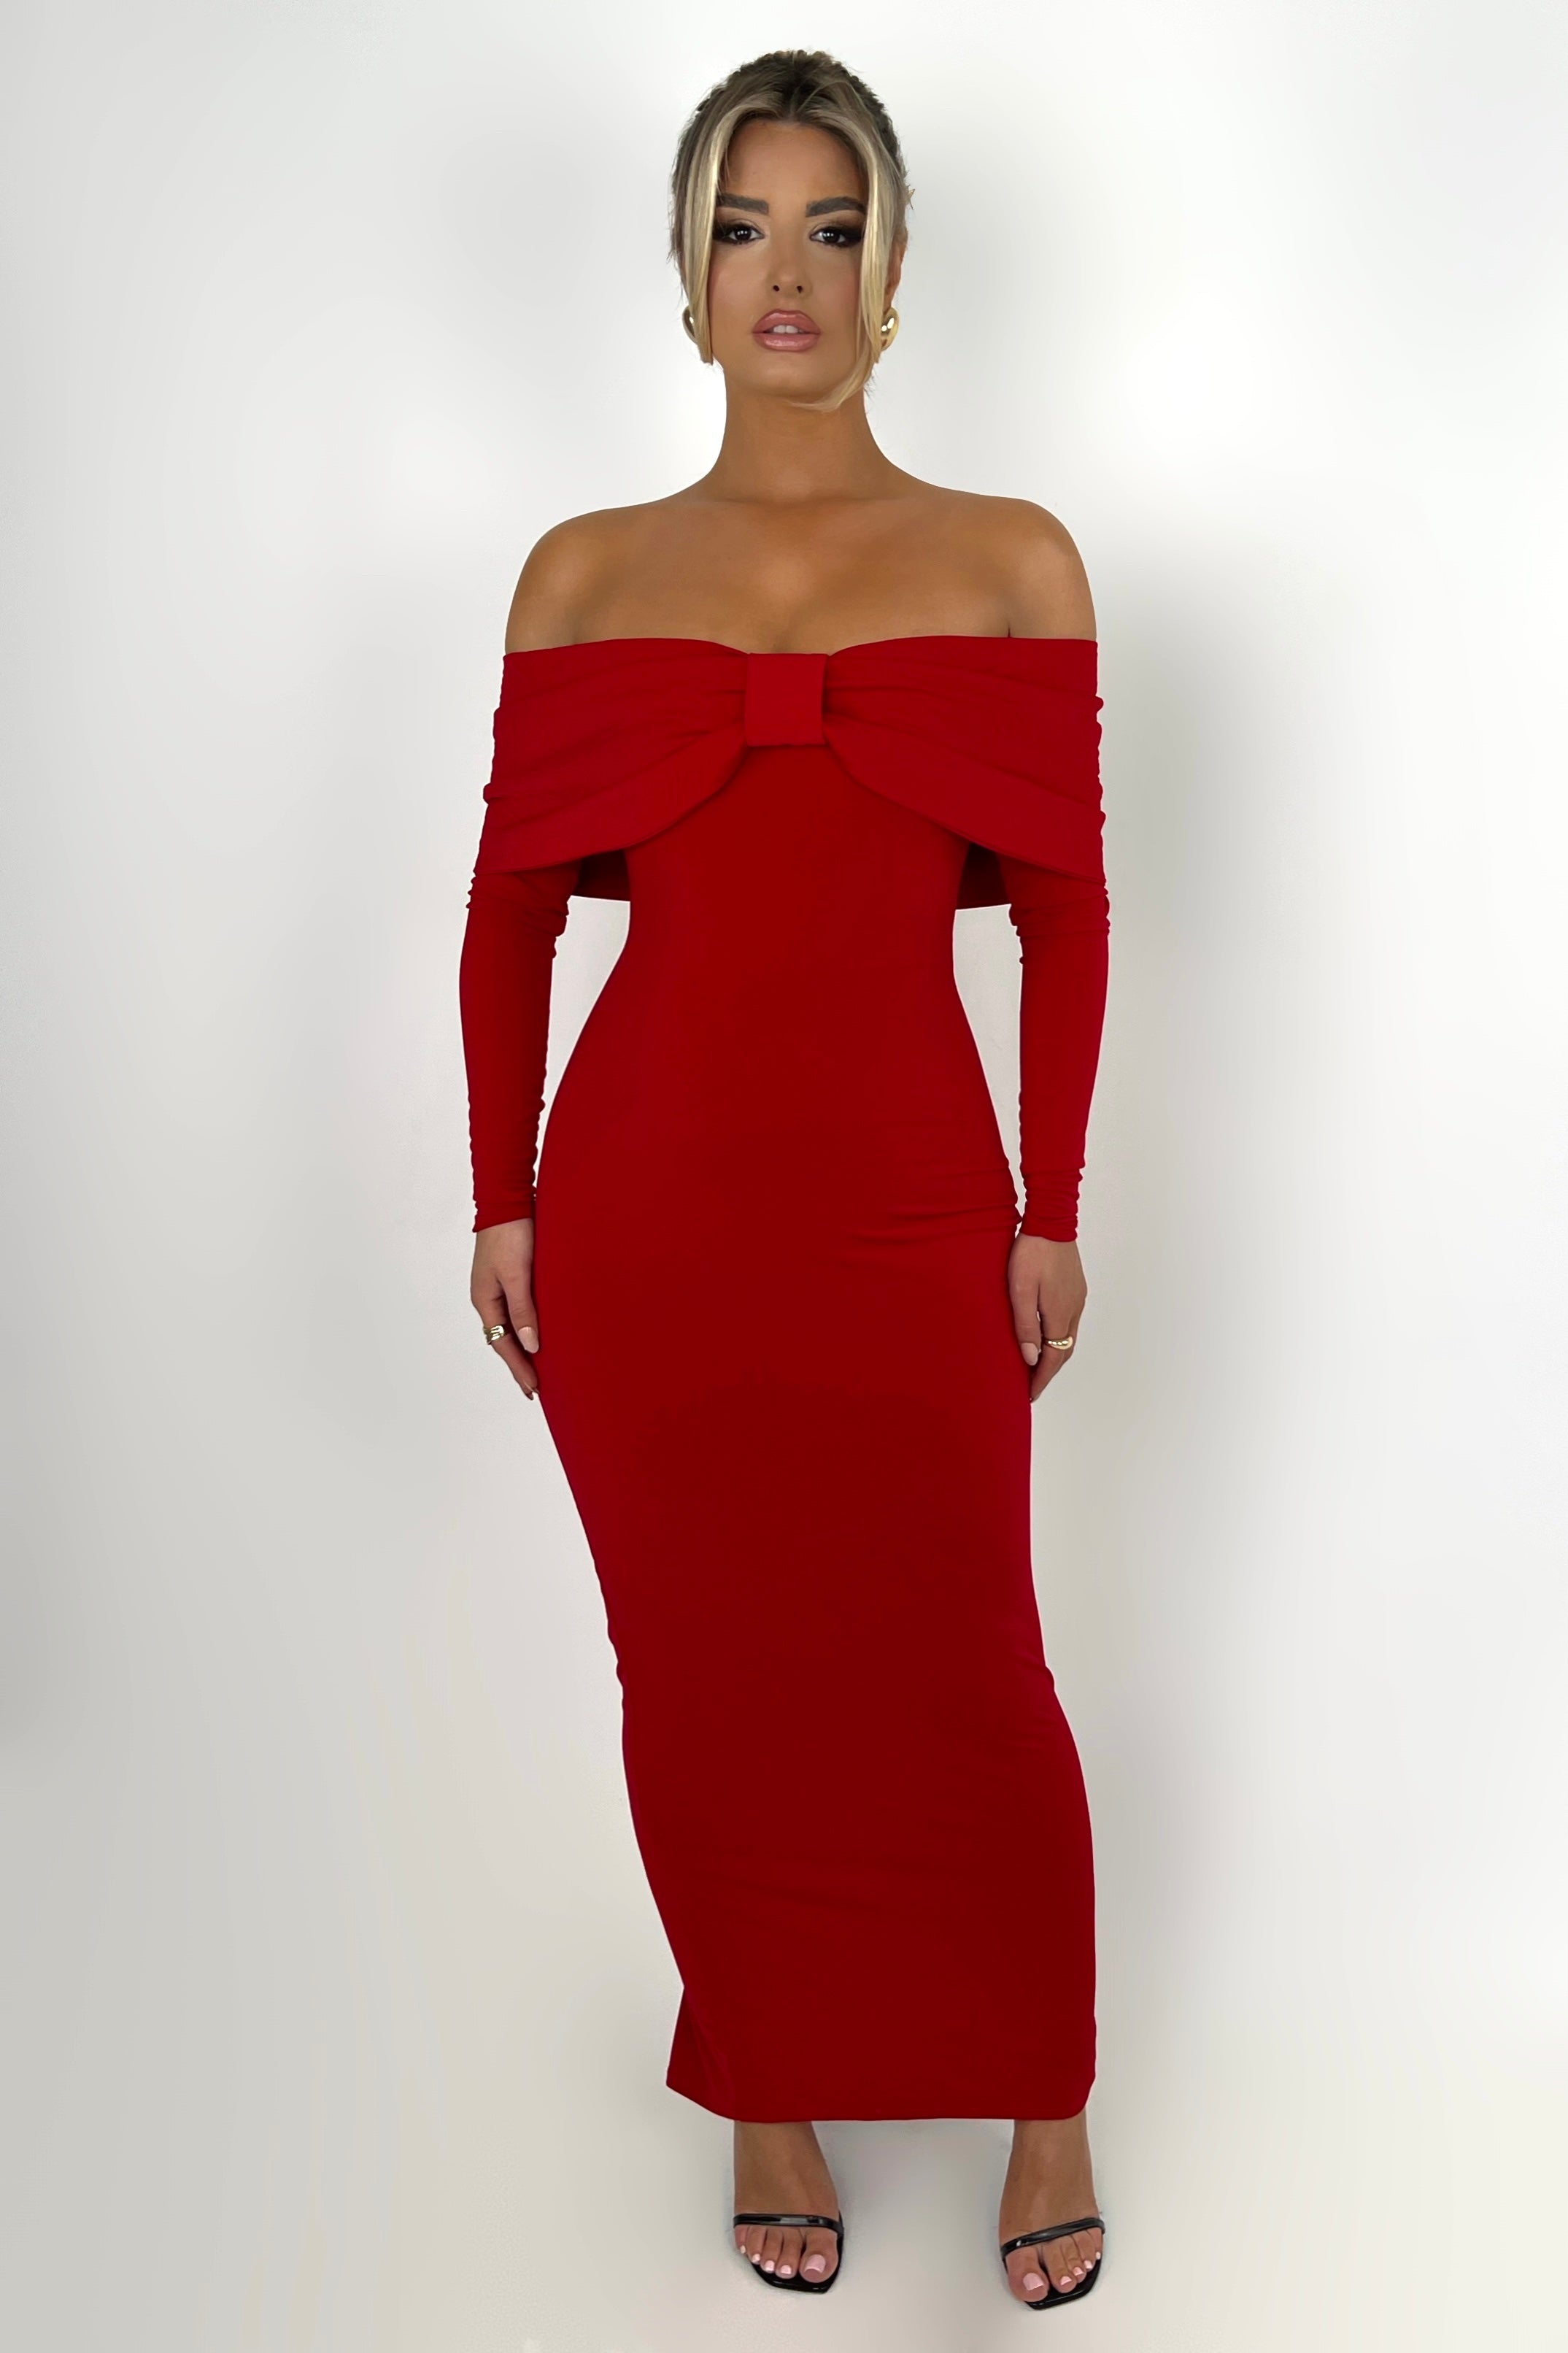 Irela Red Dress